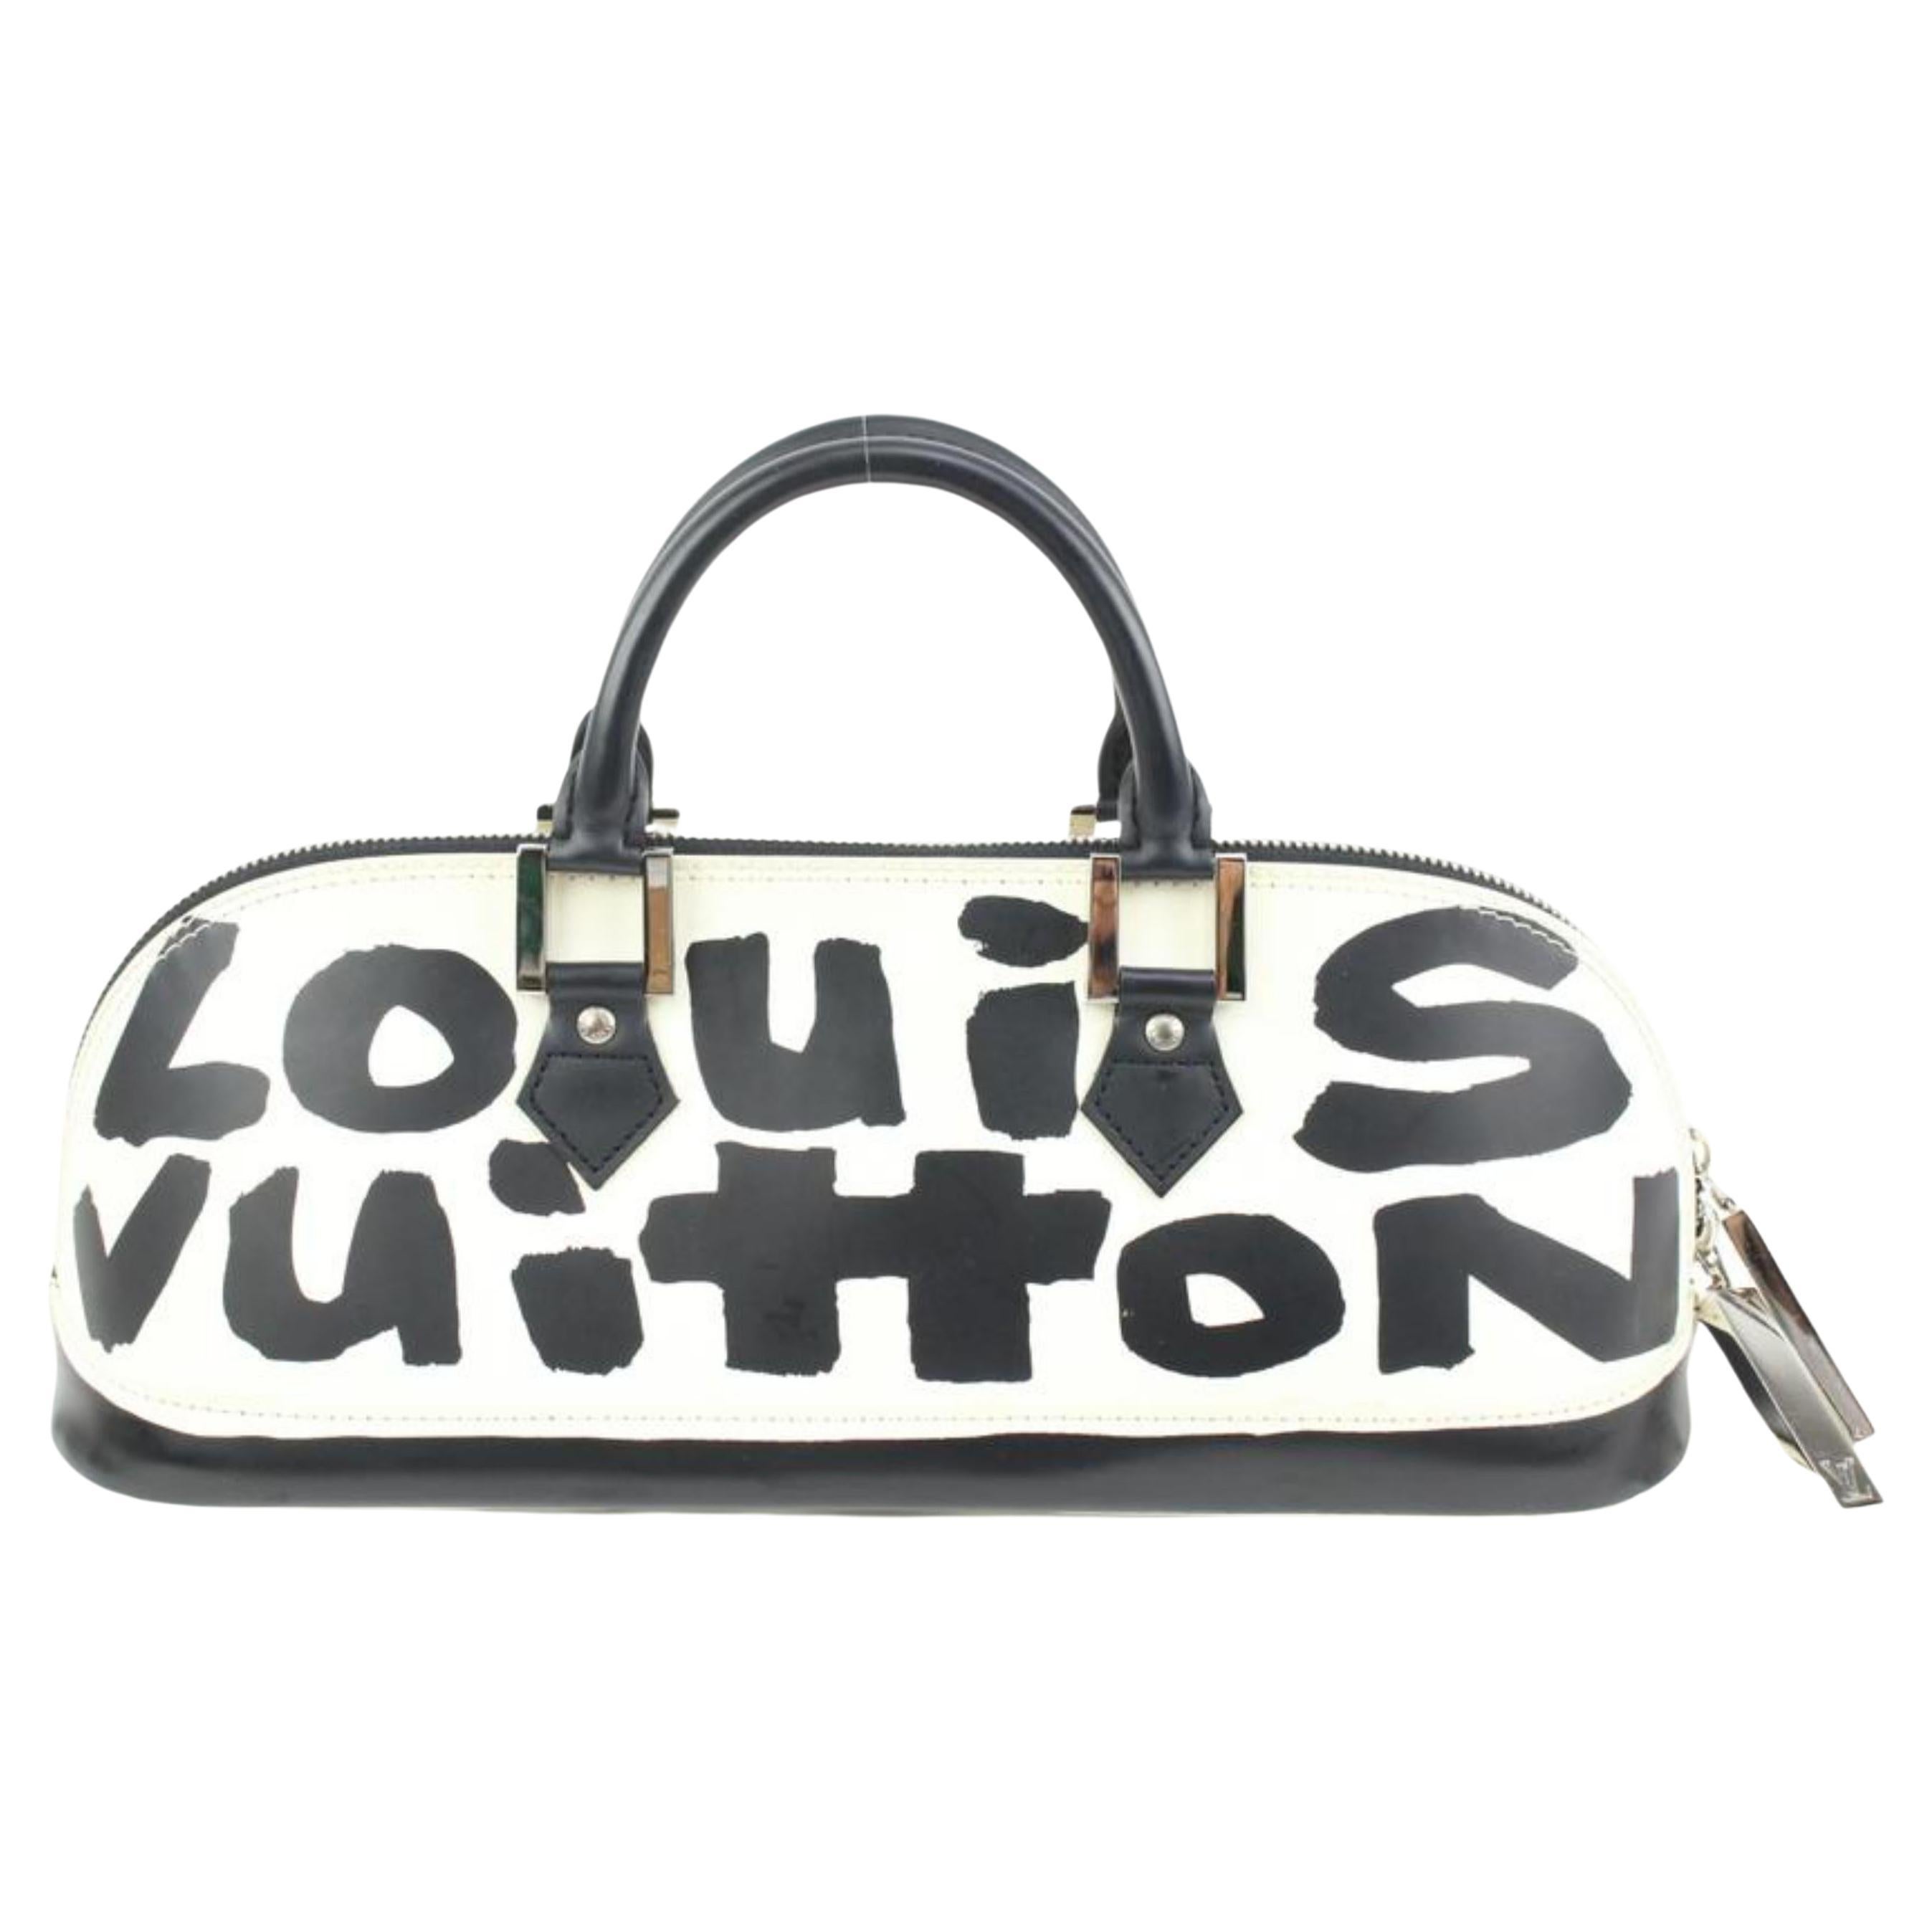 Louis Vuitton Monogram Canvas Limited Edition Stephen Sprouse